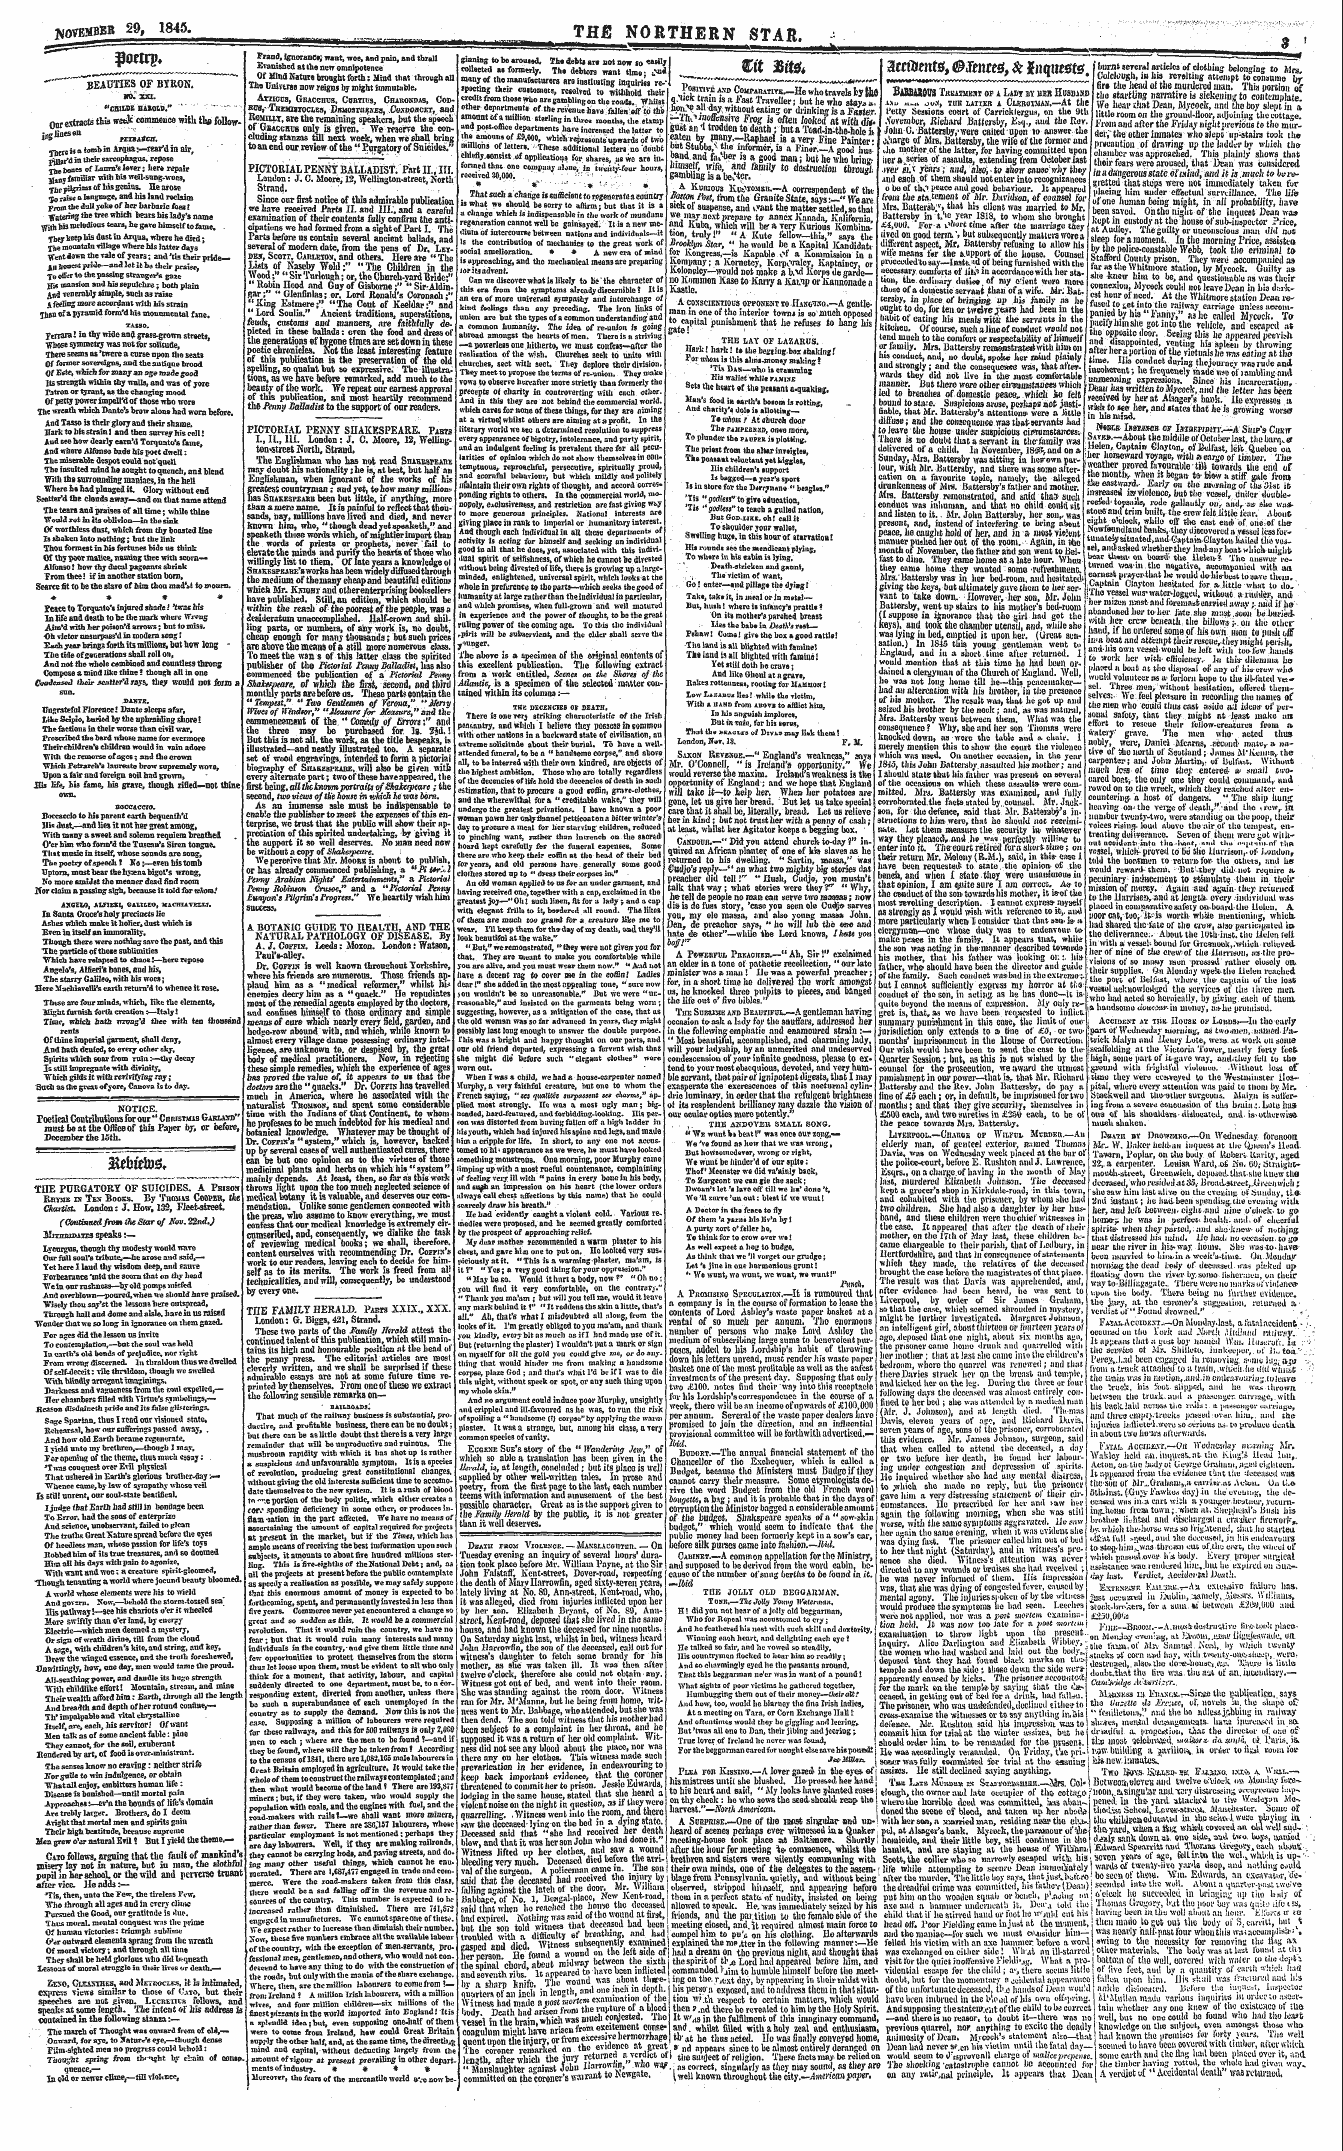 Northern Star (1837-1852): jS F Y, 3rd edition - € It Mt&